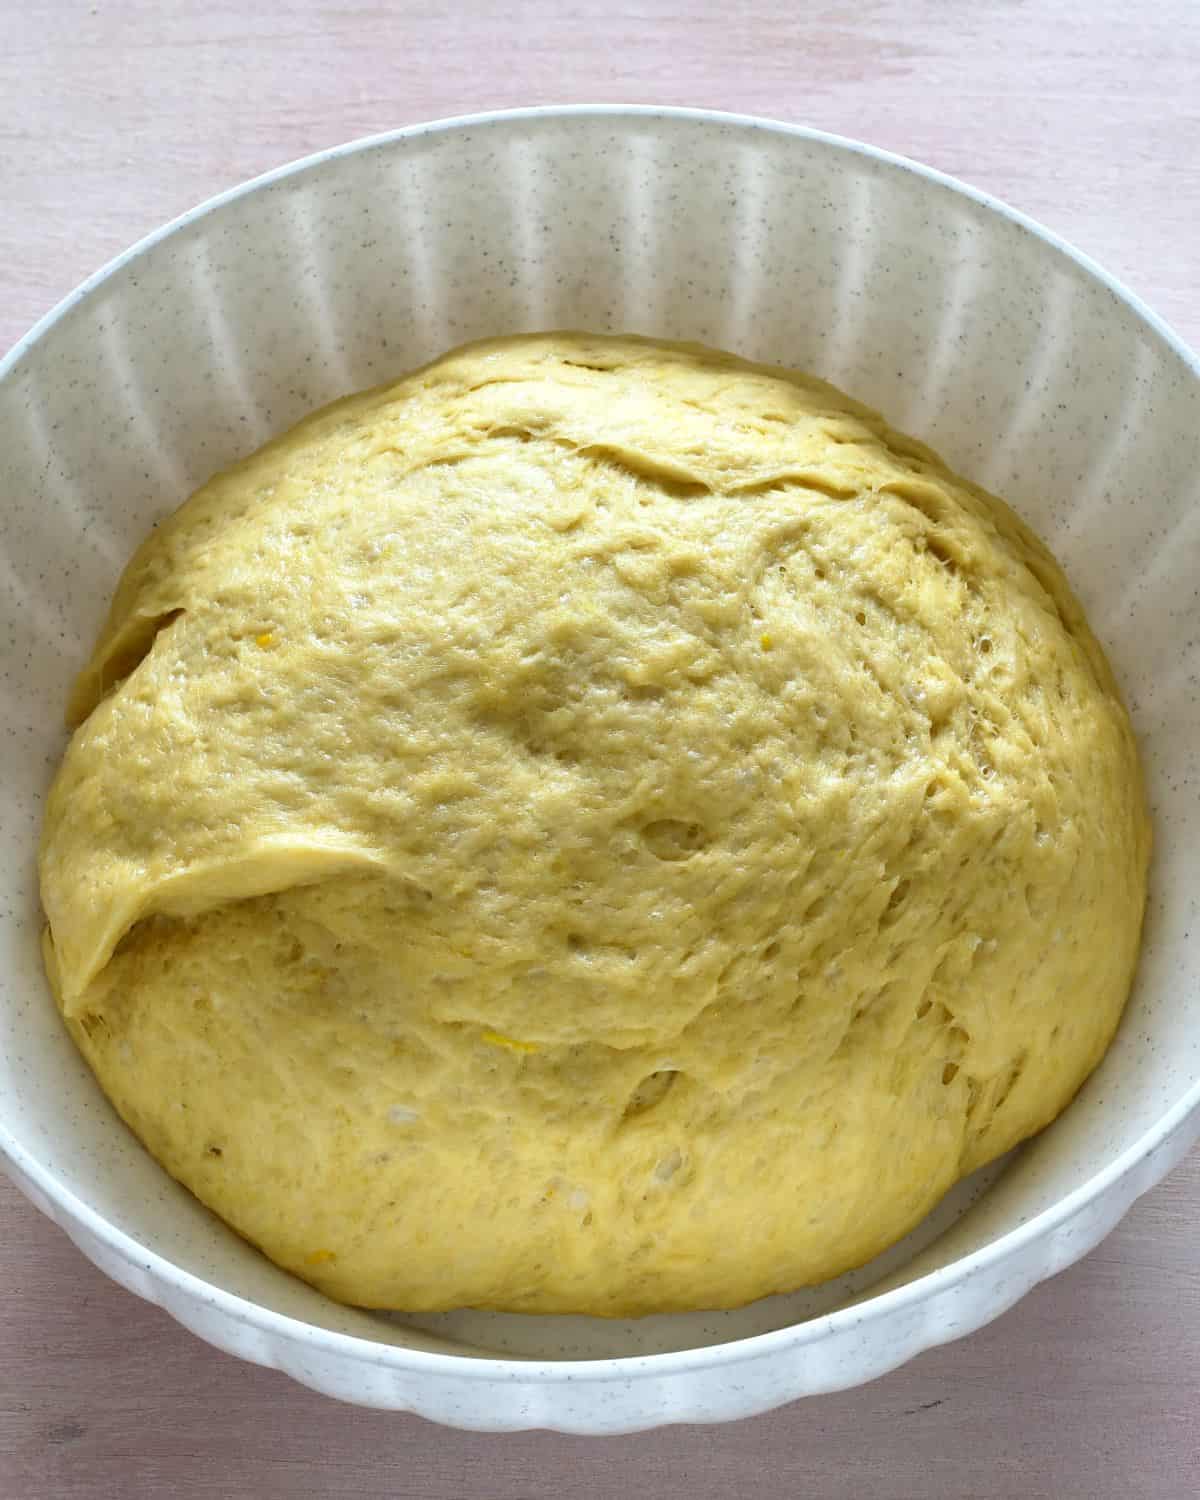 leavened yeast dough